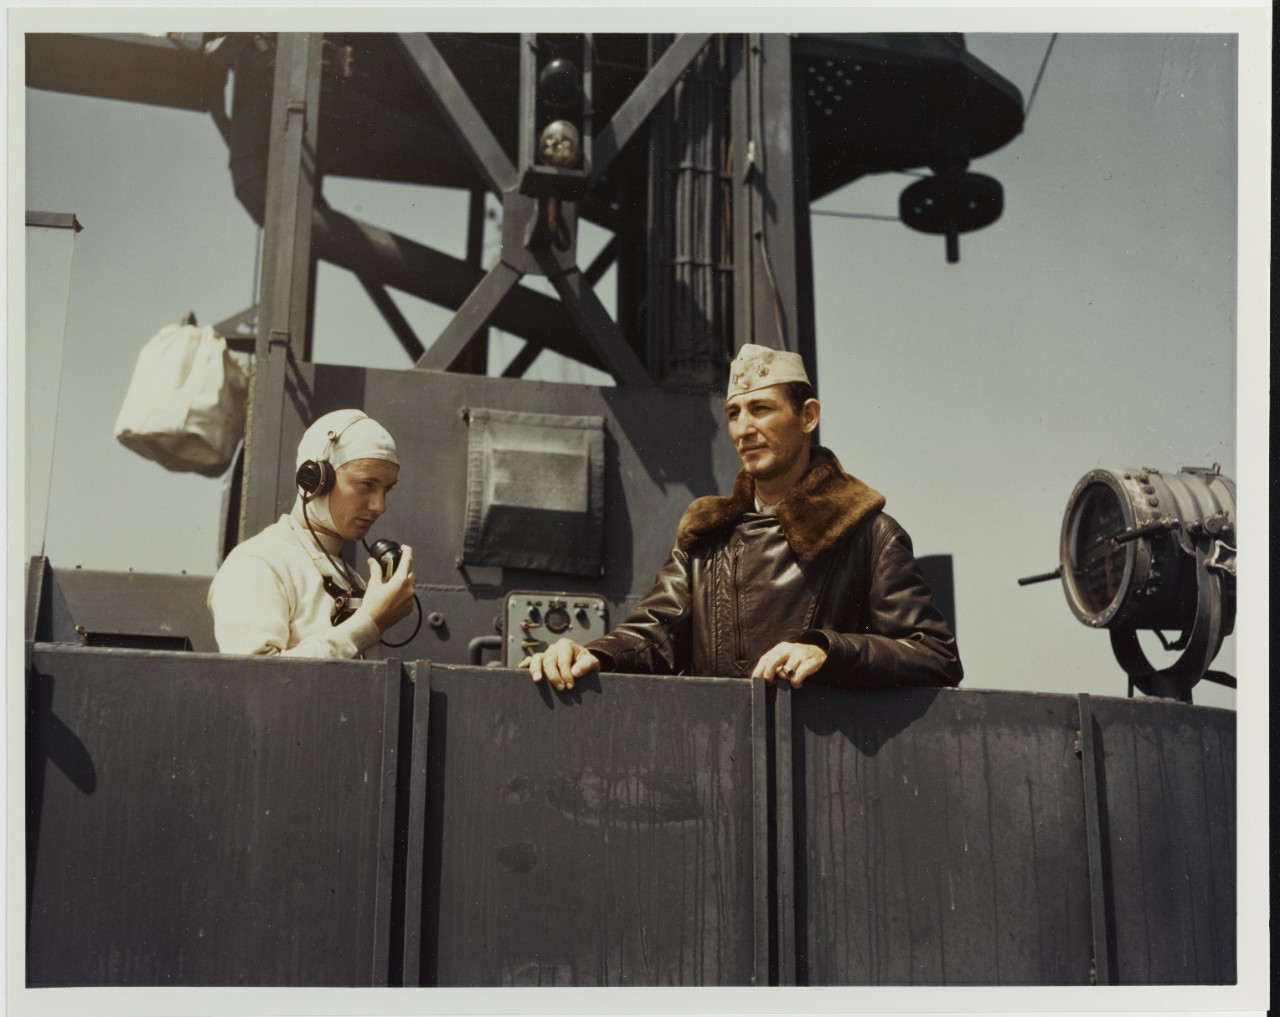 Air Officer and his "Talker", circa 1943-1945